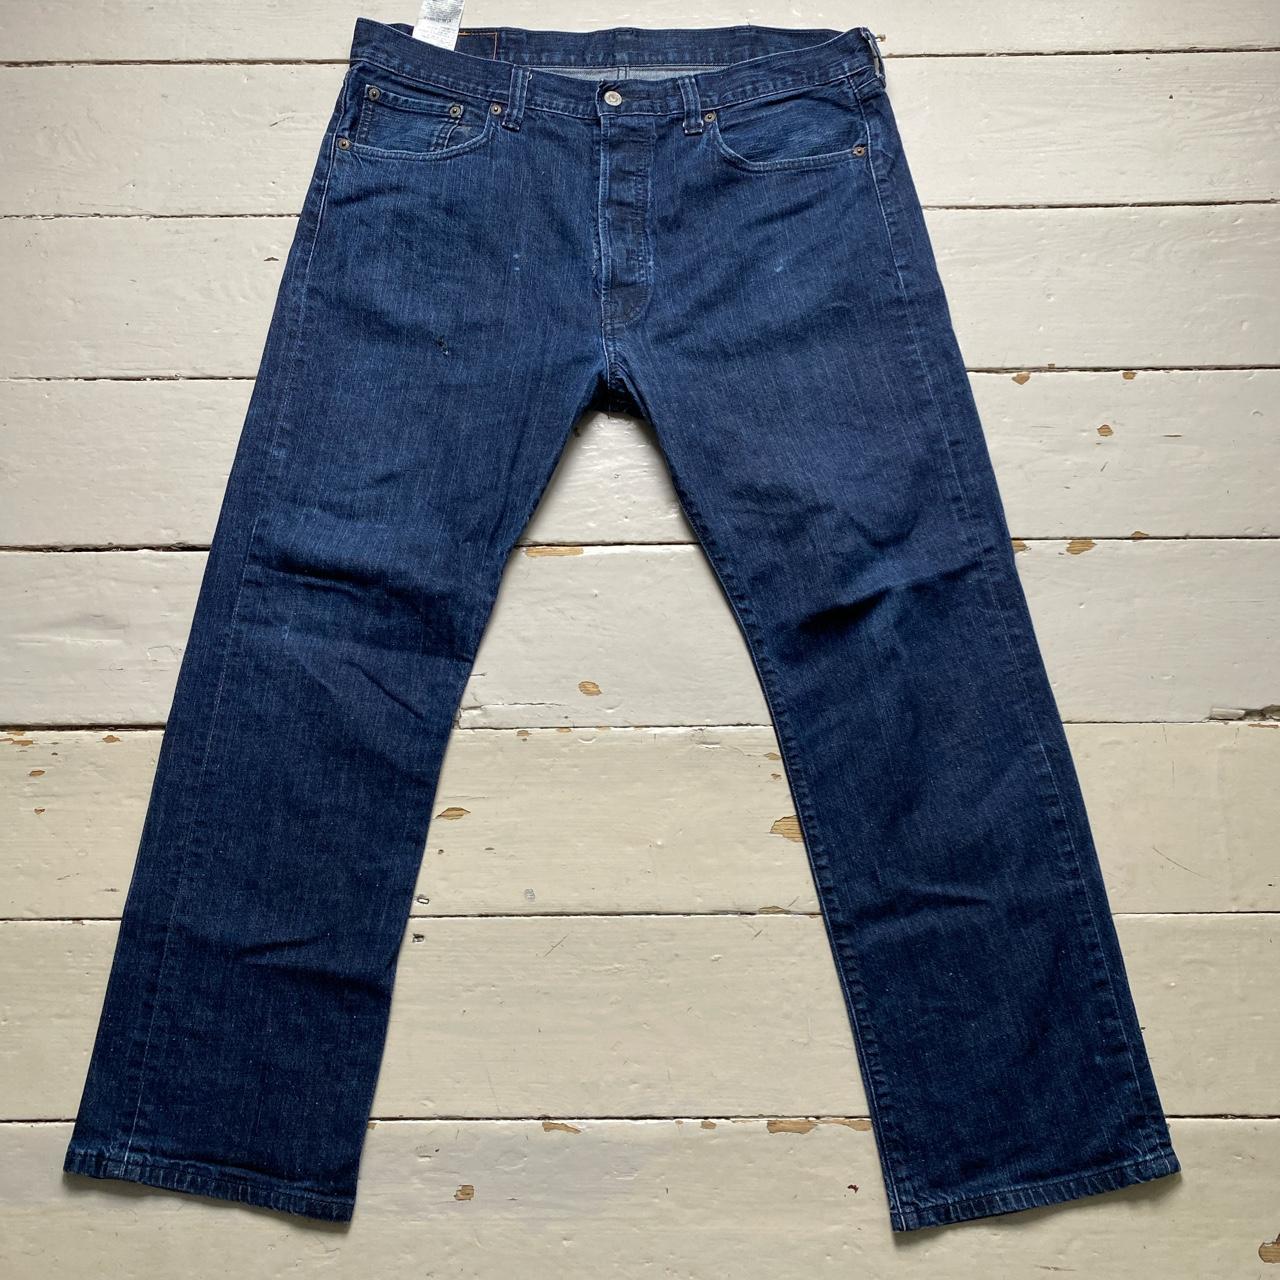 Levis 501 Baggy Navy Jeans